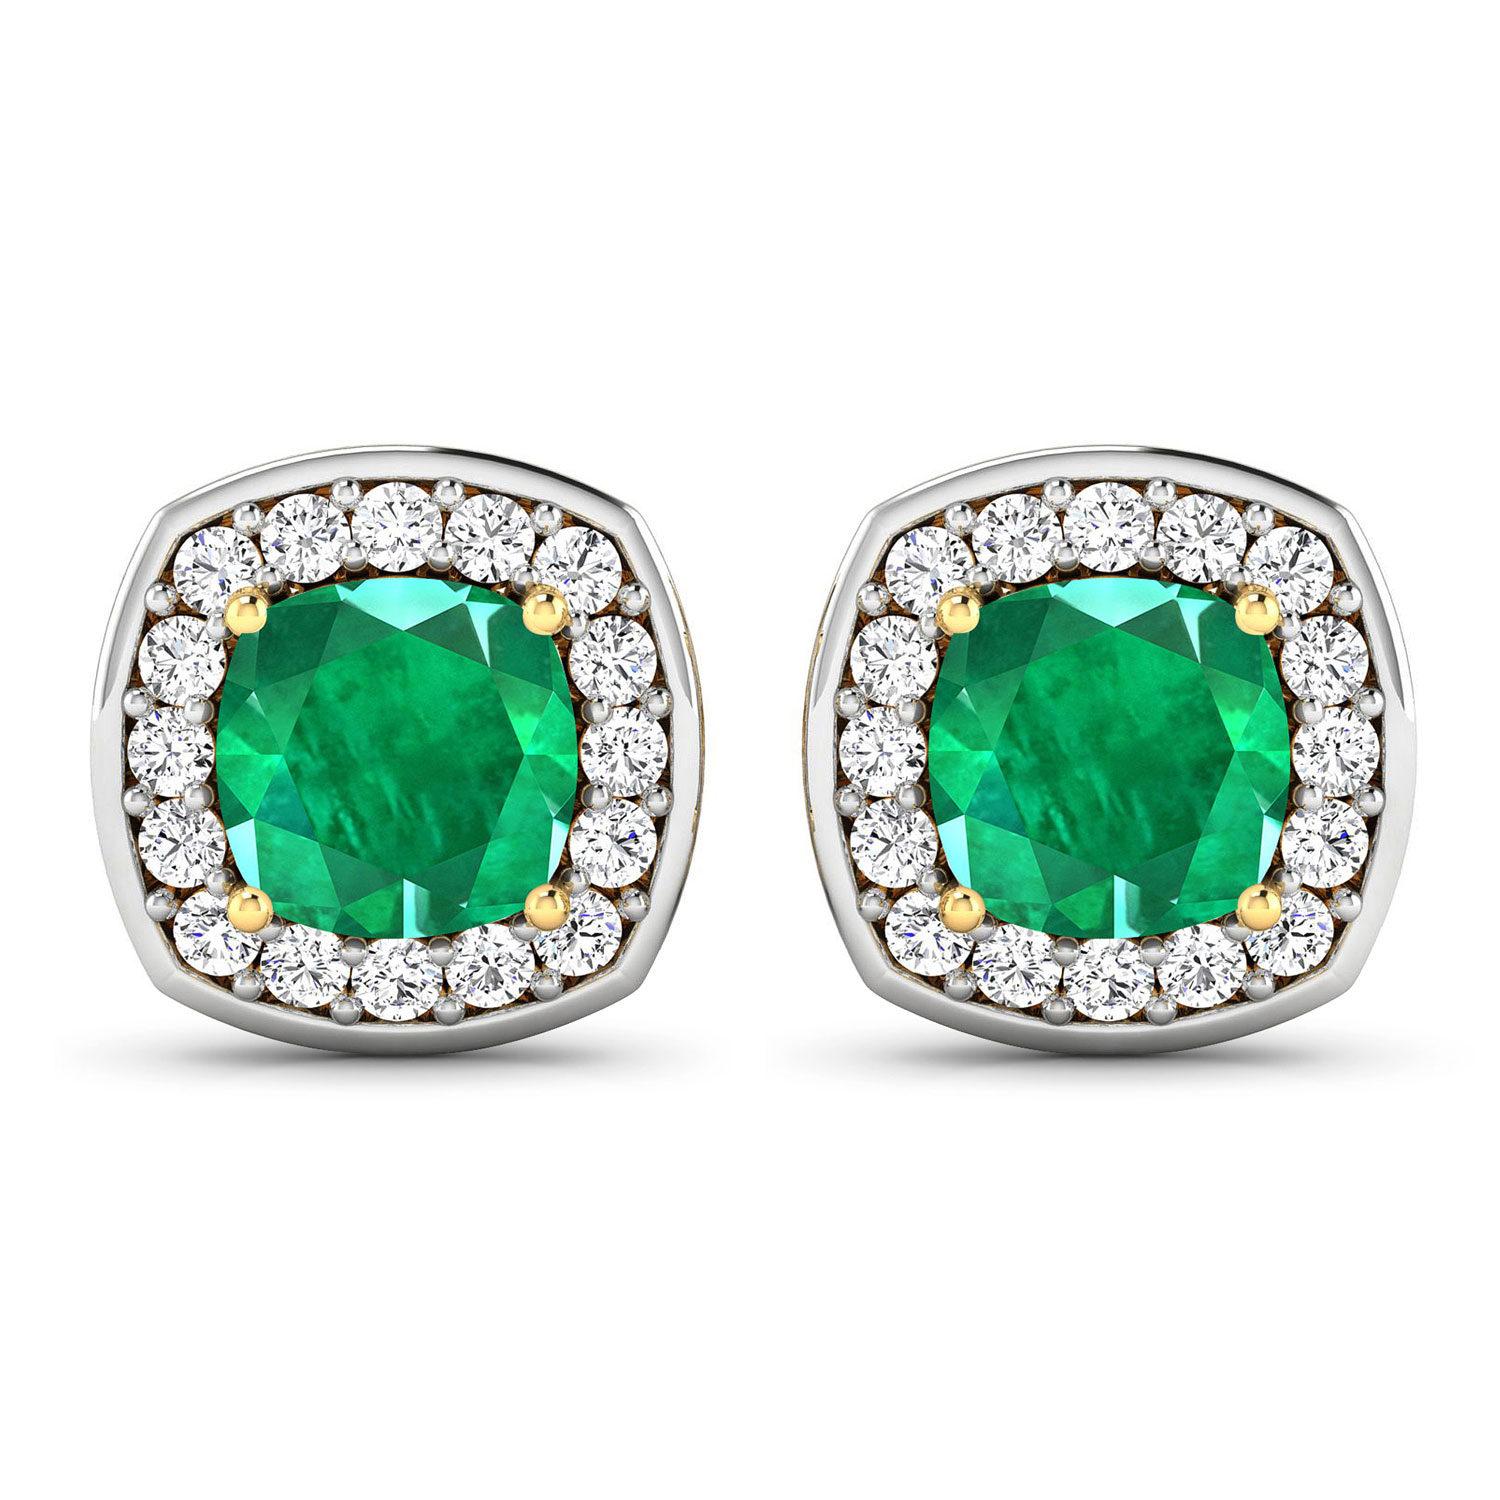 Contemporary Natural Zambian Emerald & Diamond Earrings Total 2.25 Carats 14k Yellow Gold